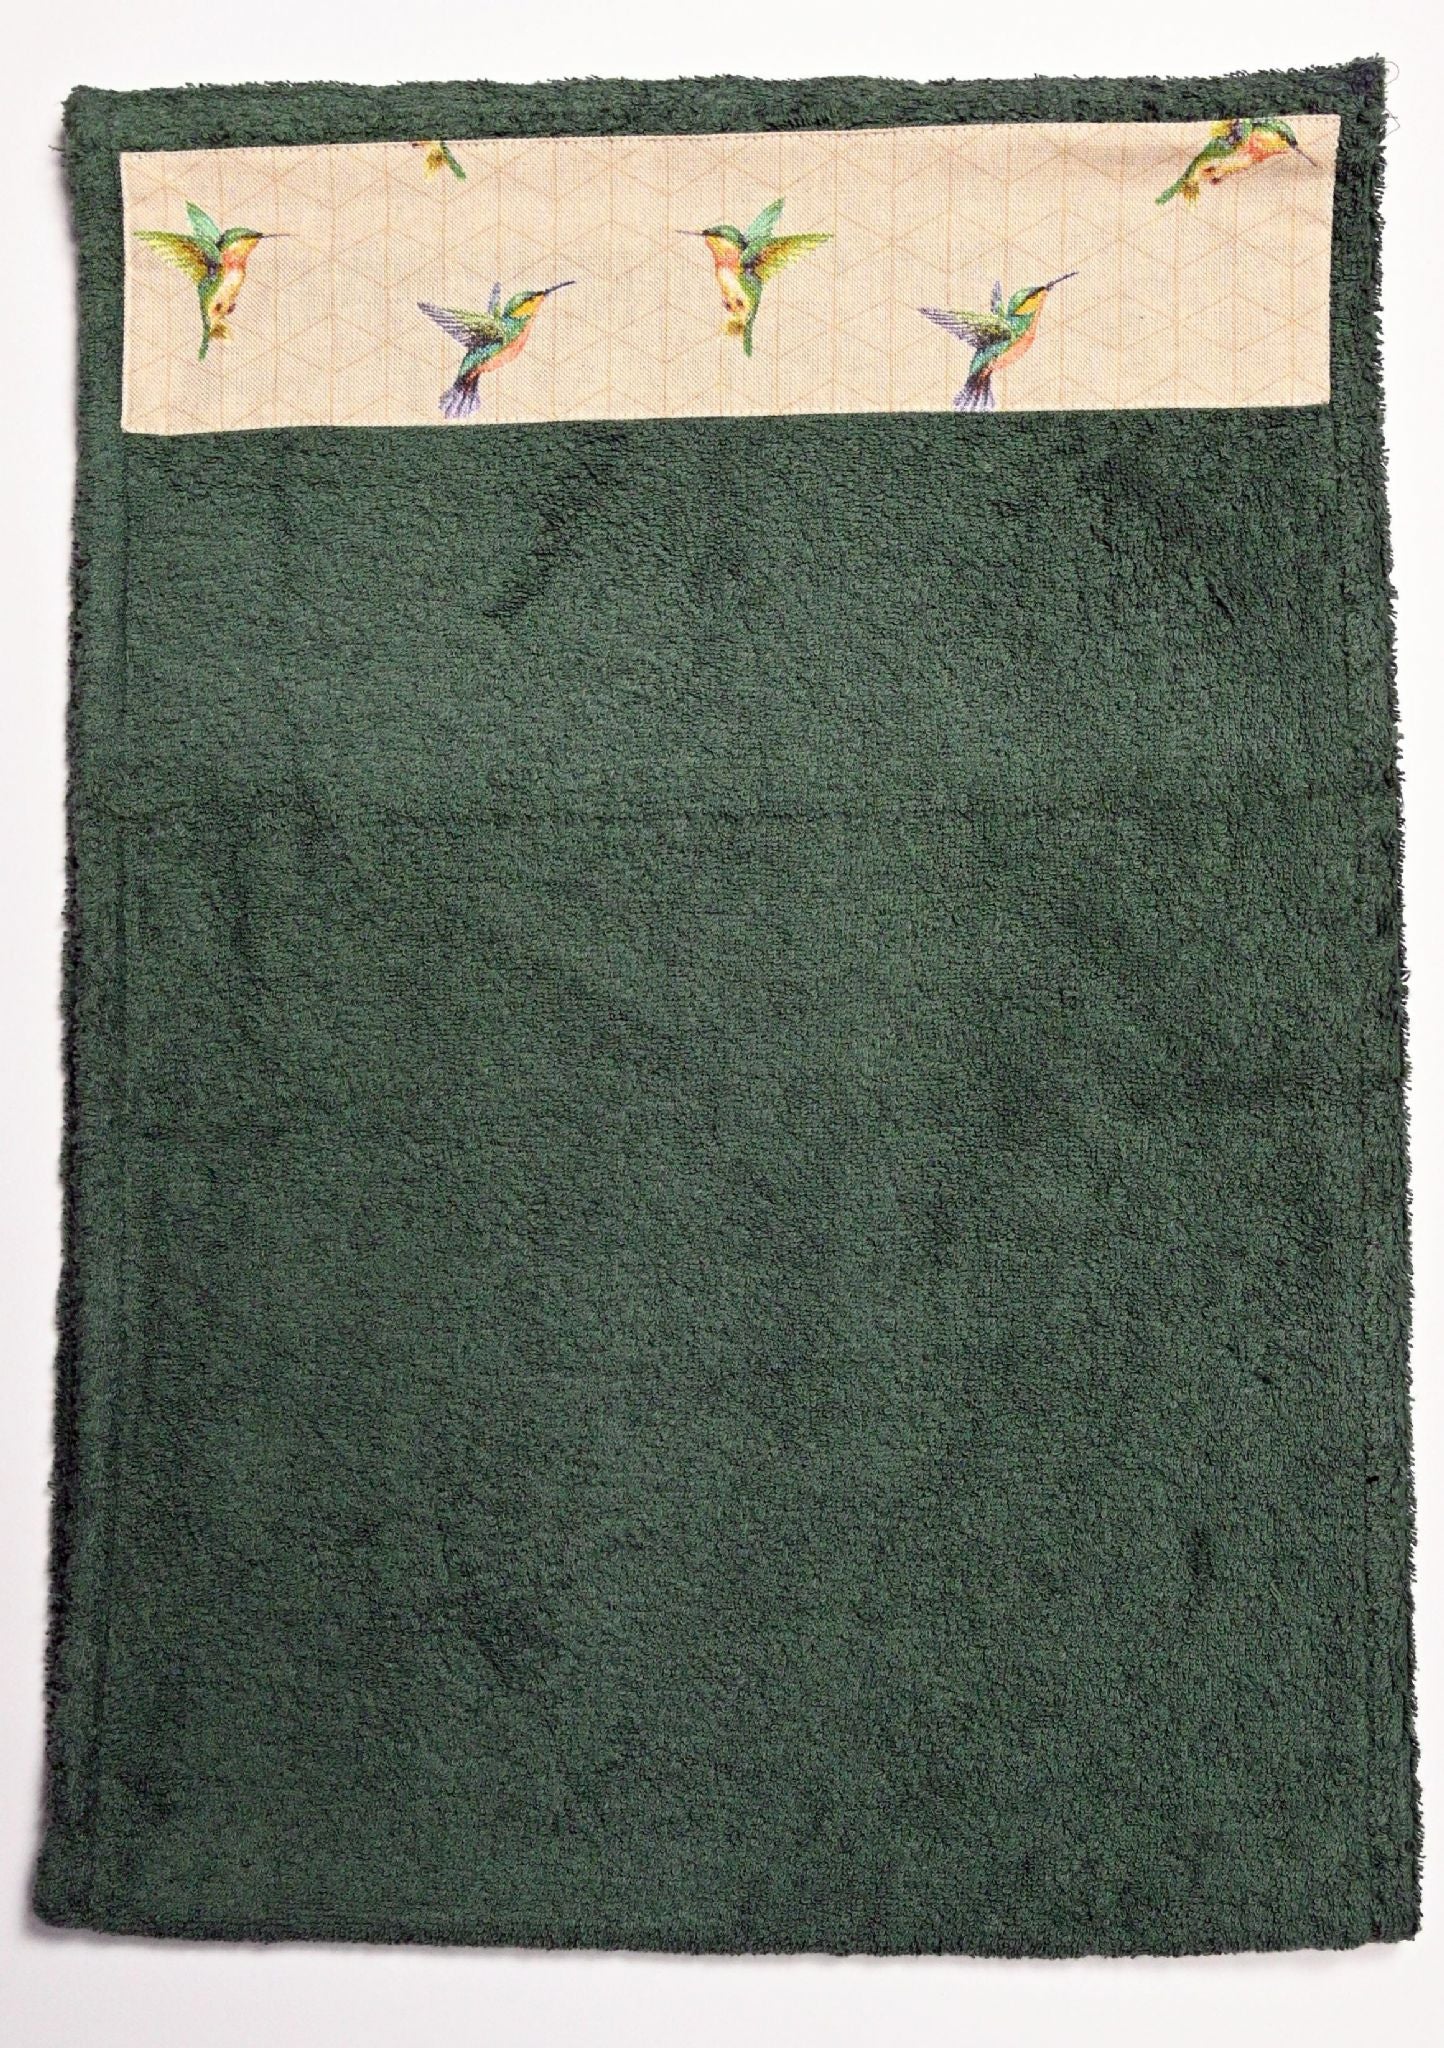 Hand Roller Towels, Humming Bird,  Black, Green or Navy Blue Towel